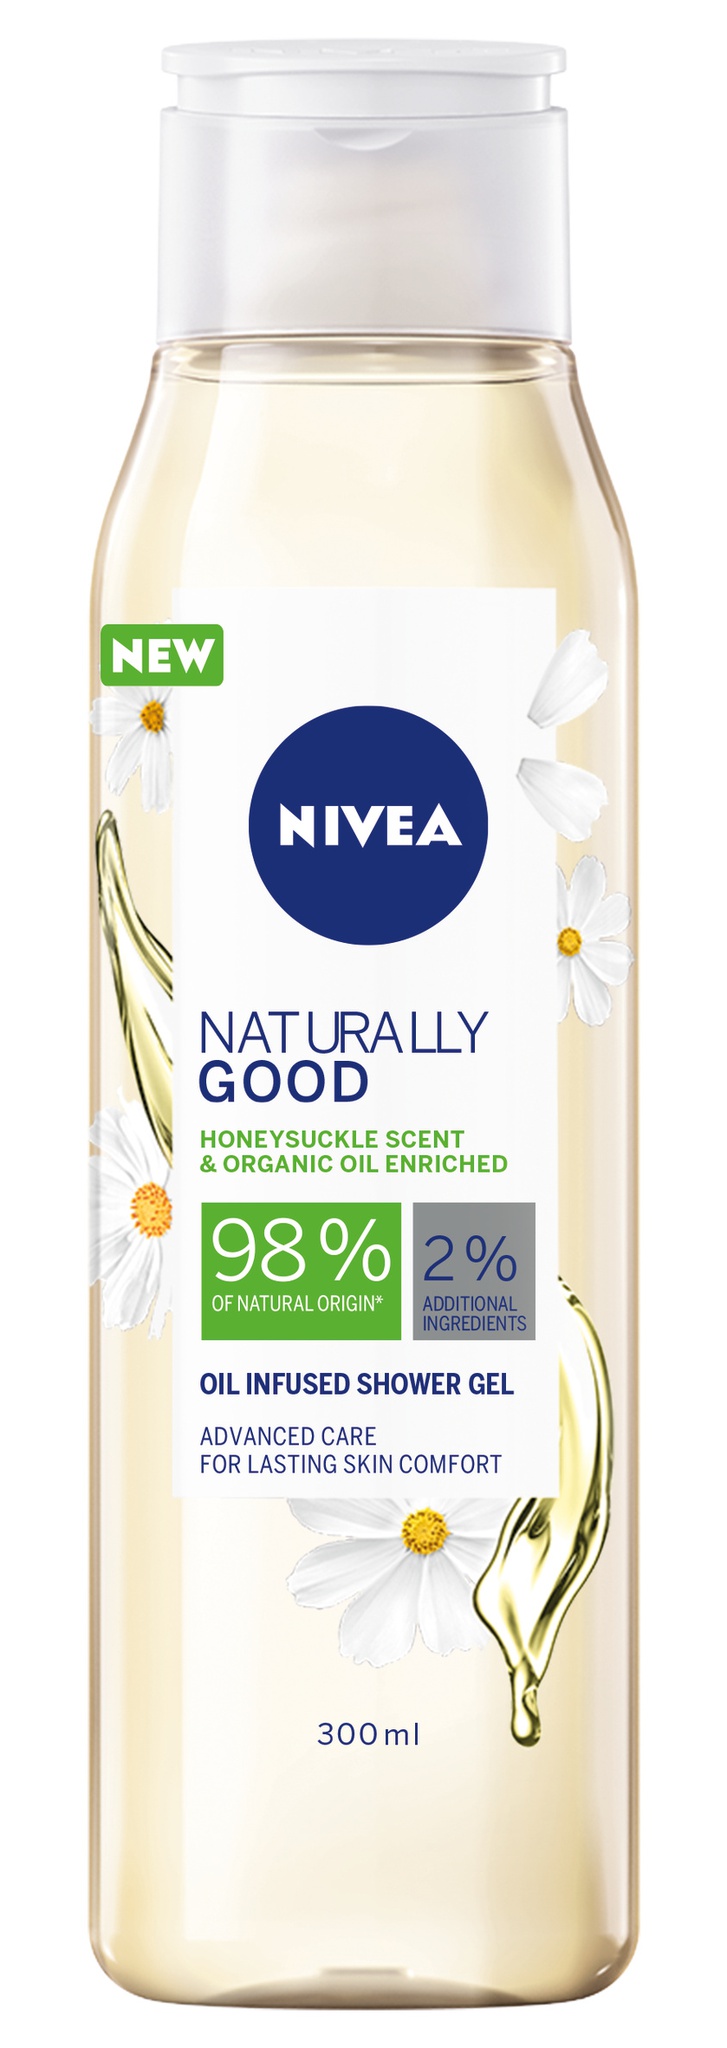 Nivea Naturally Good Honey Suckle Shower Gel